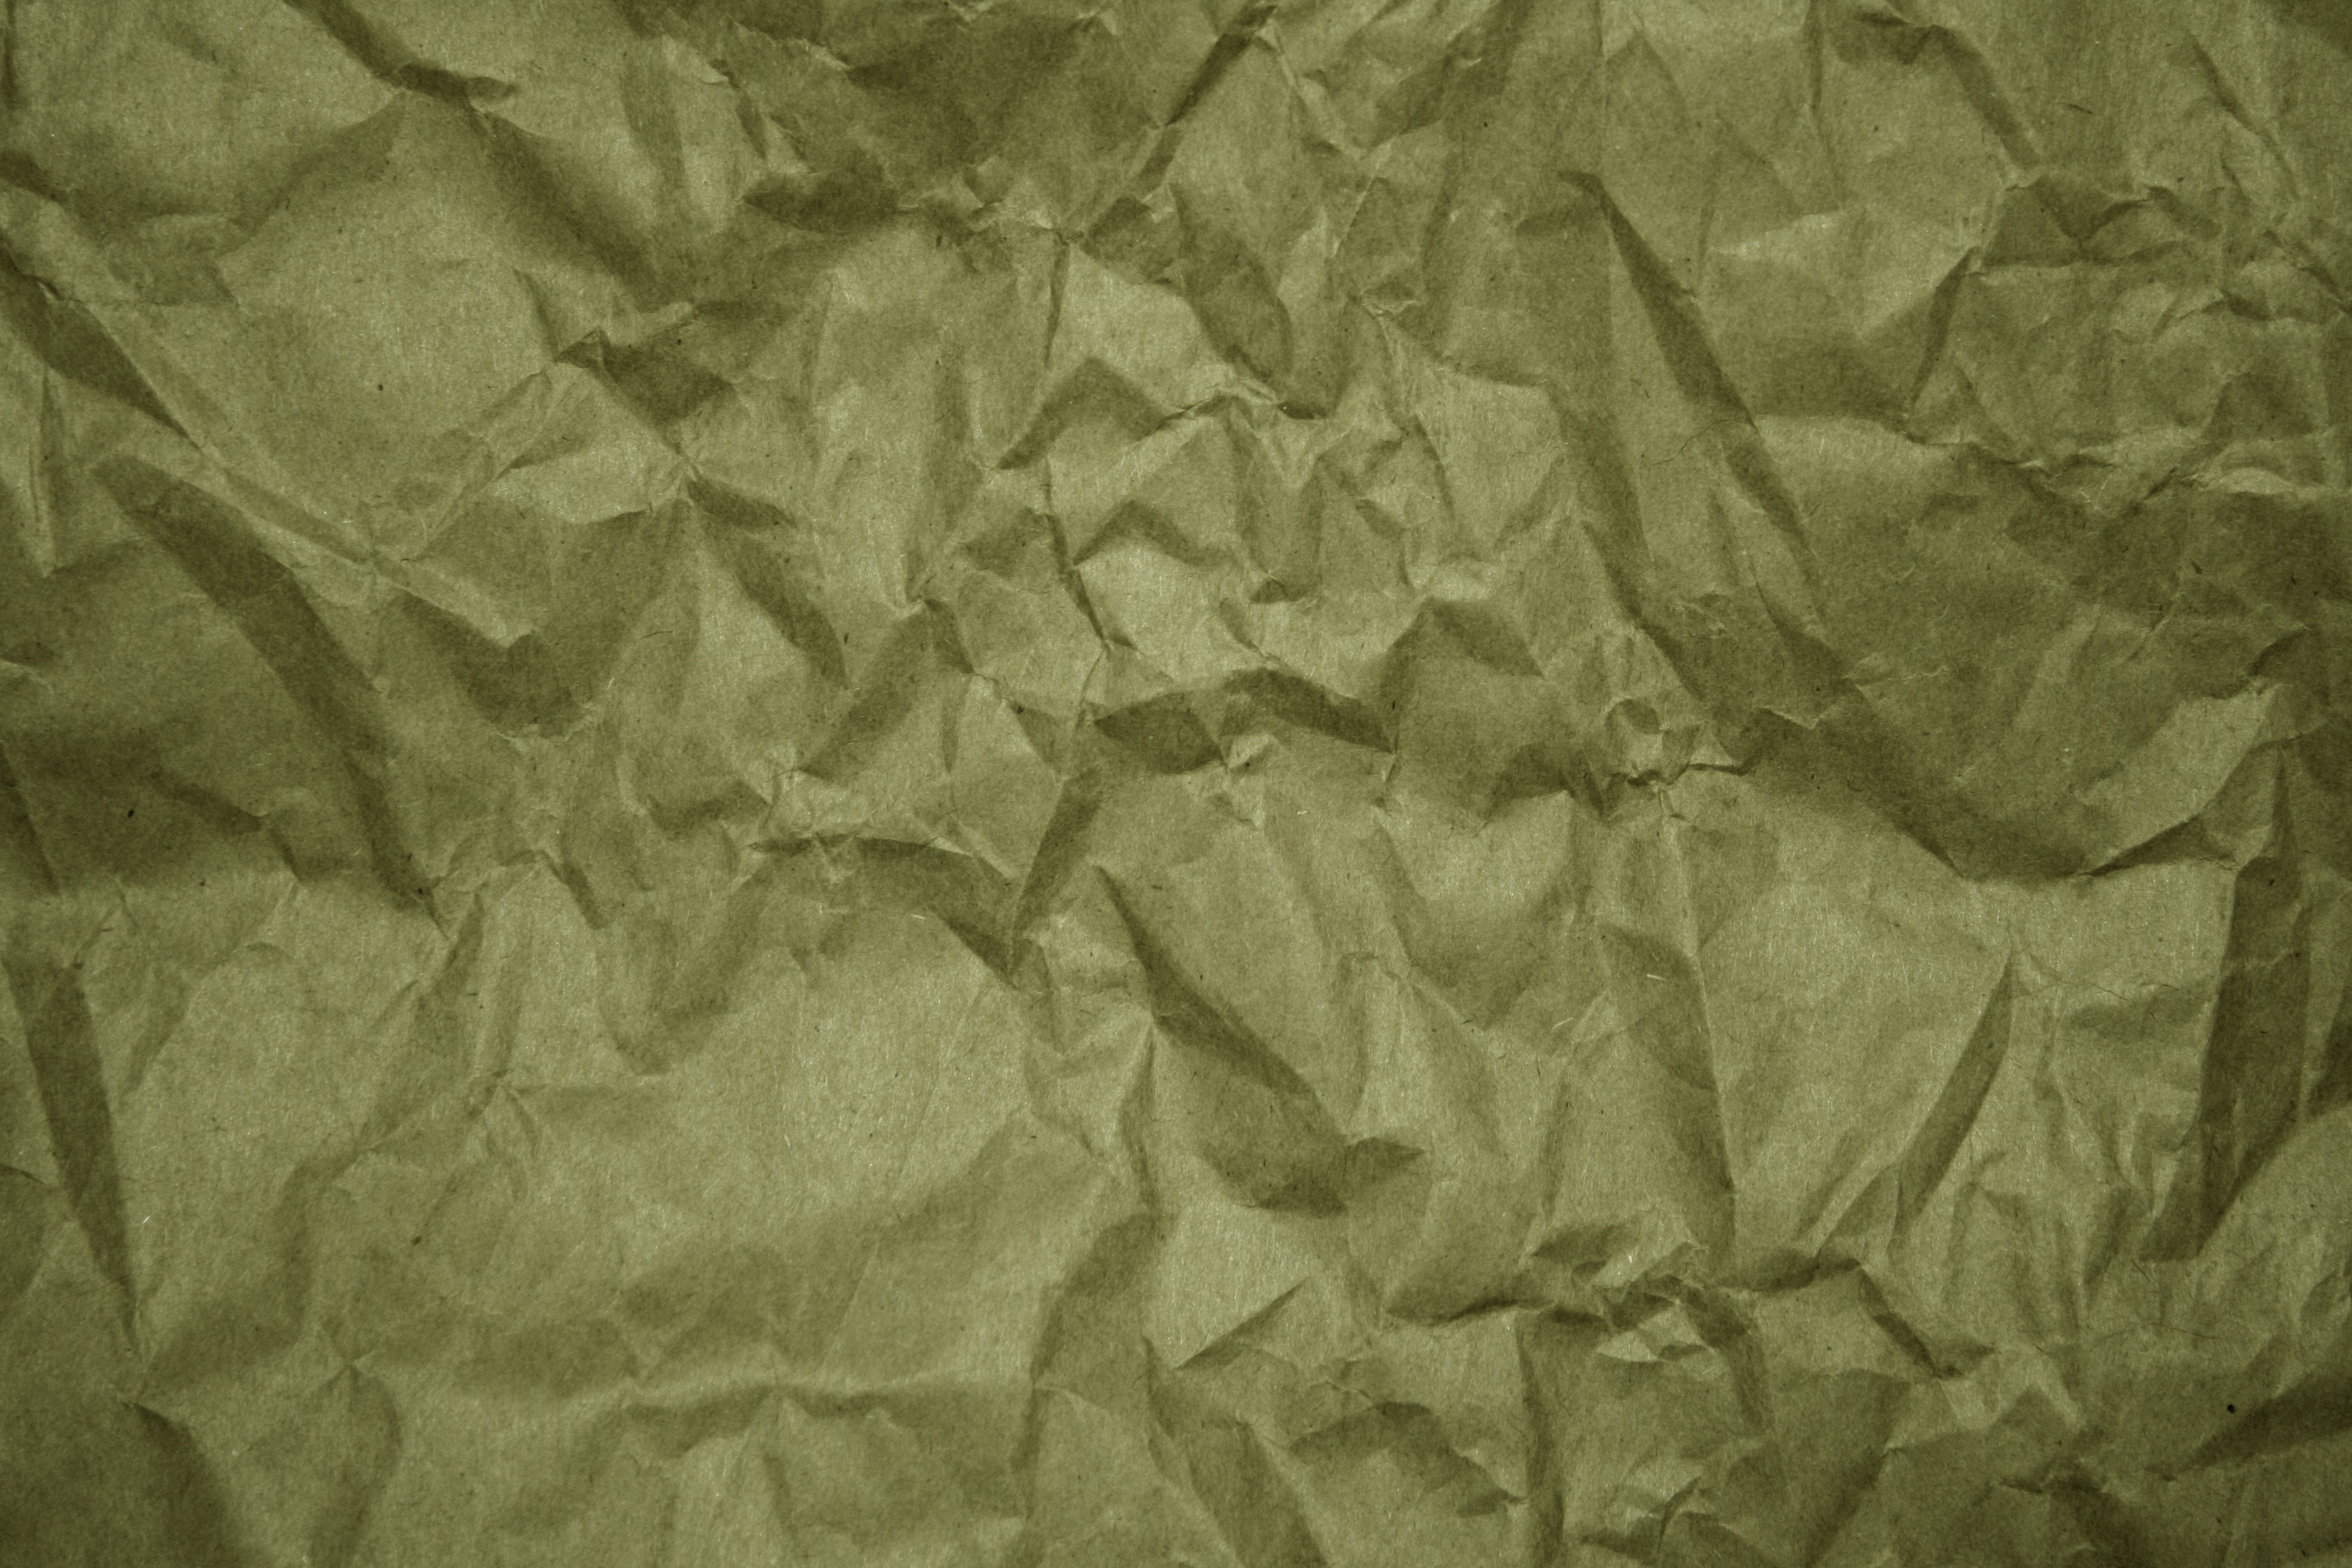 File:Crumpled olive green paper.jpg - Wikimedia Commons